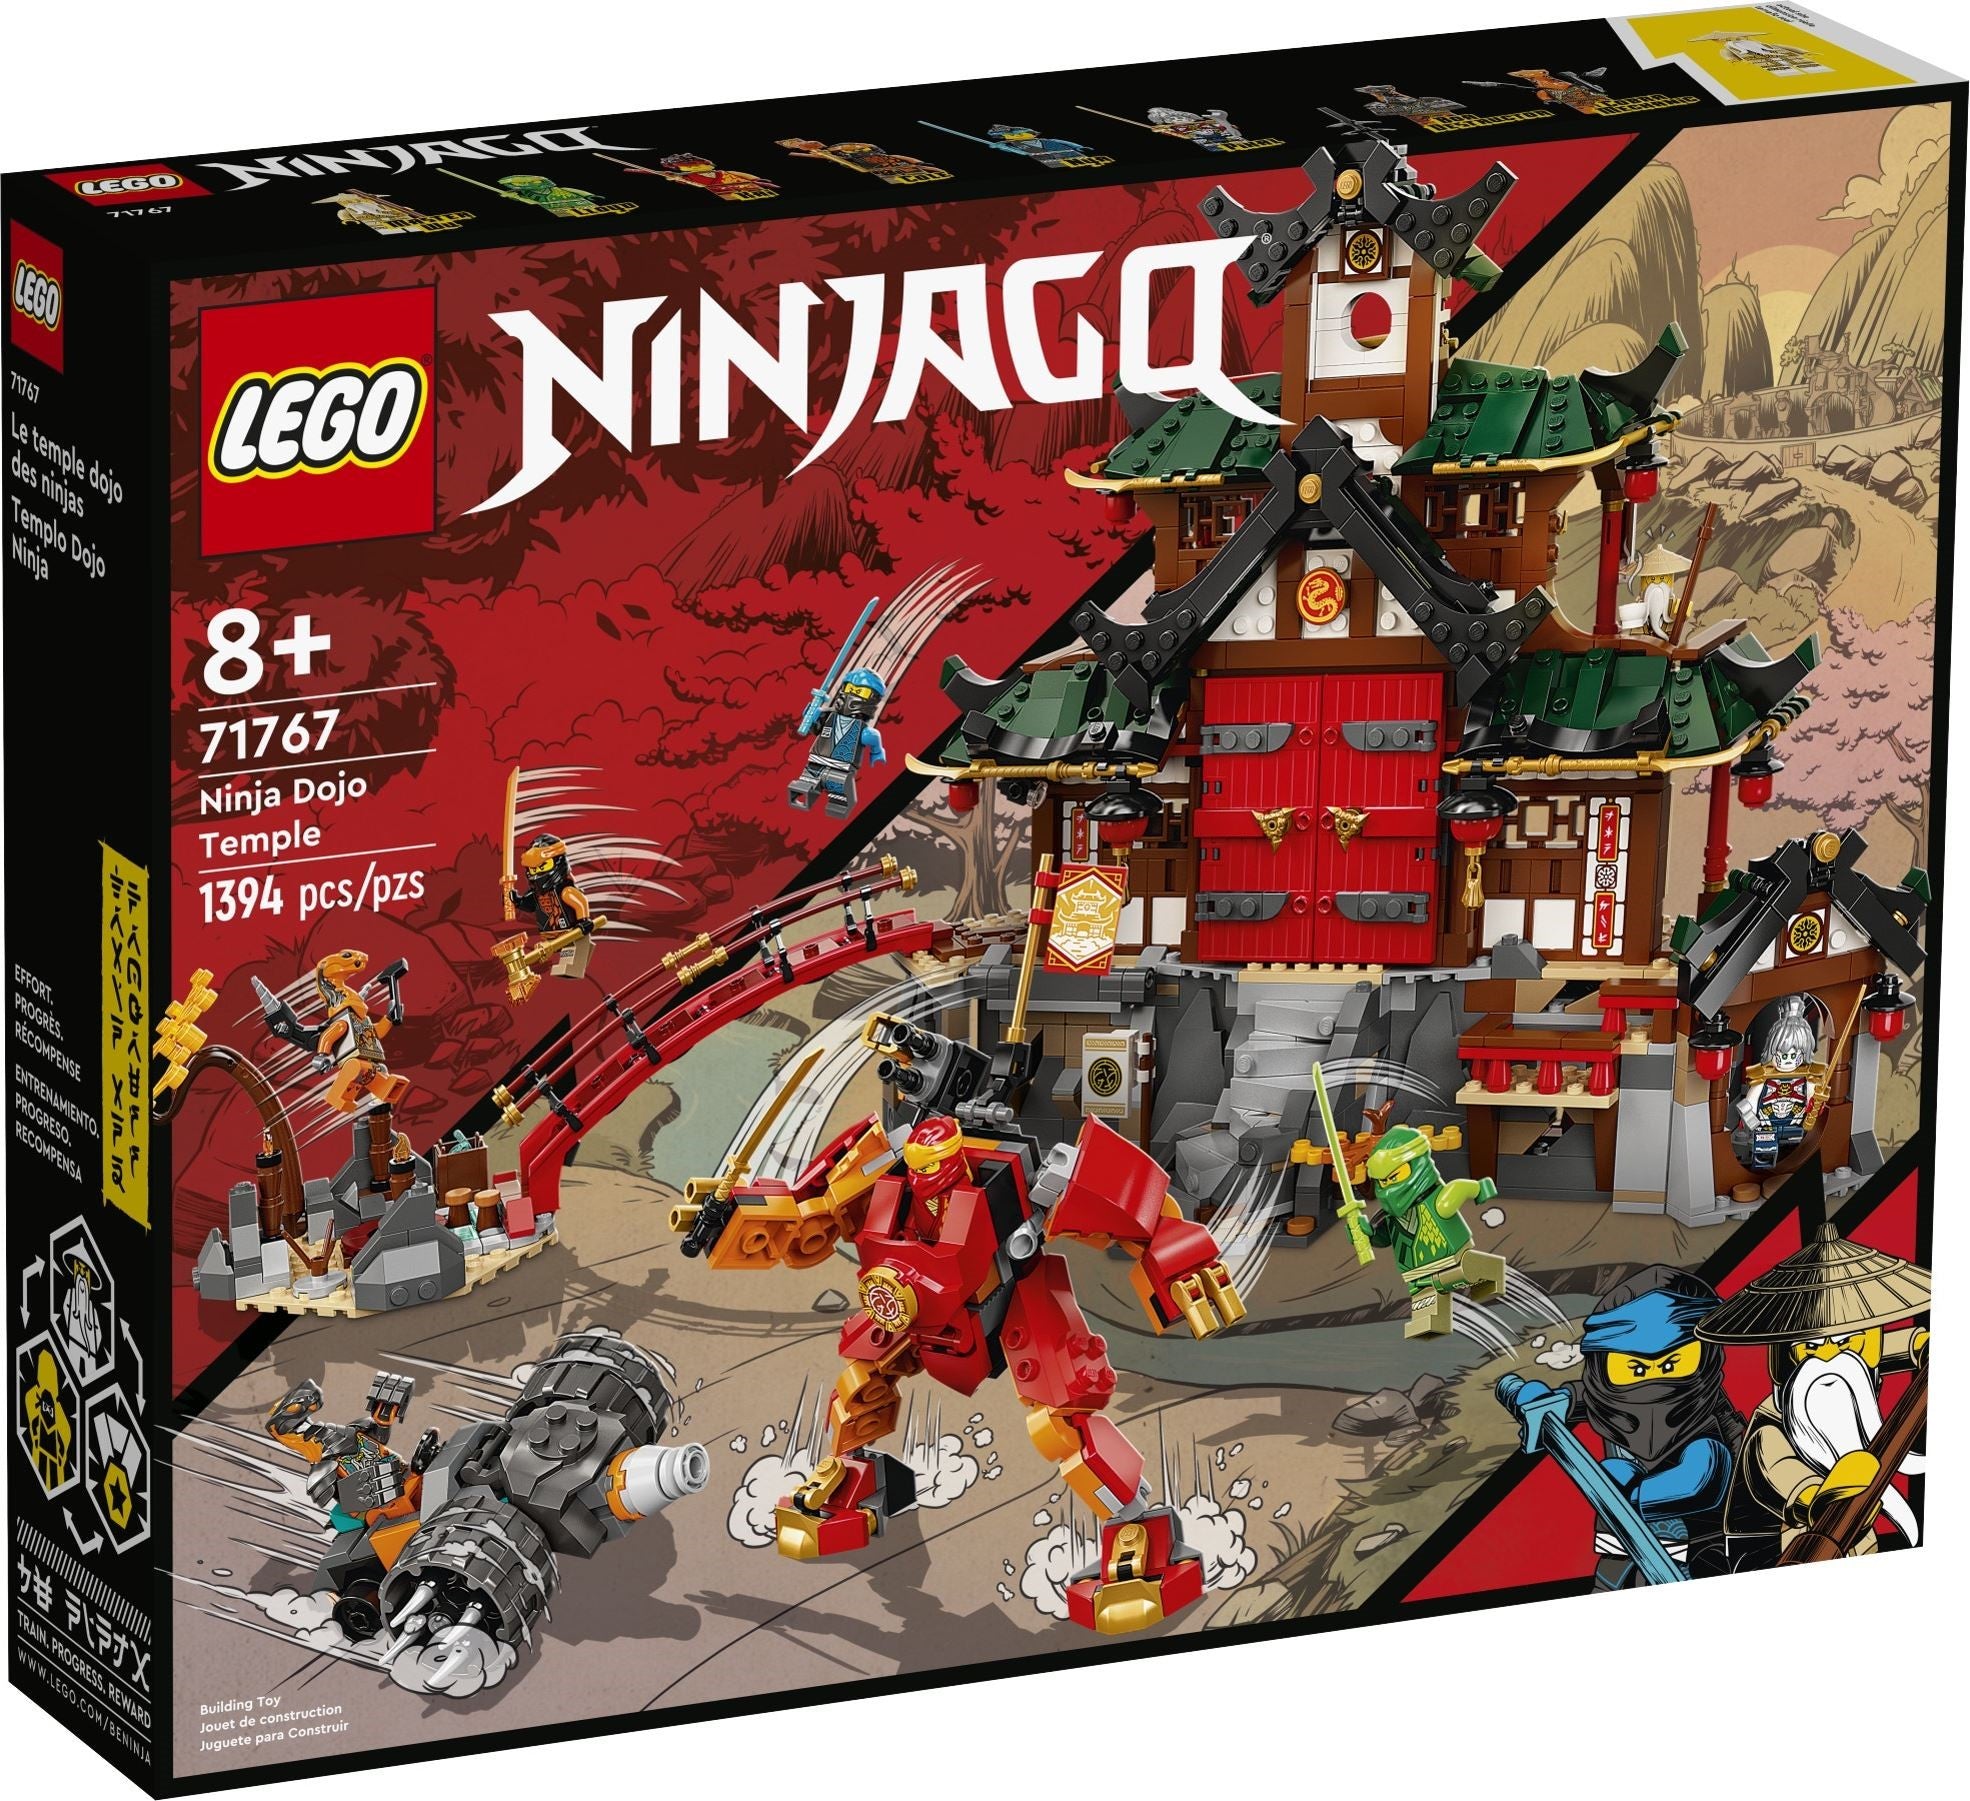 Lego Ninjago 71767 - Ninja Dojo Temple